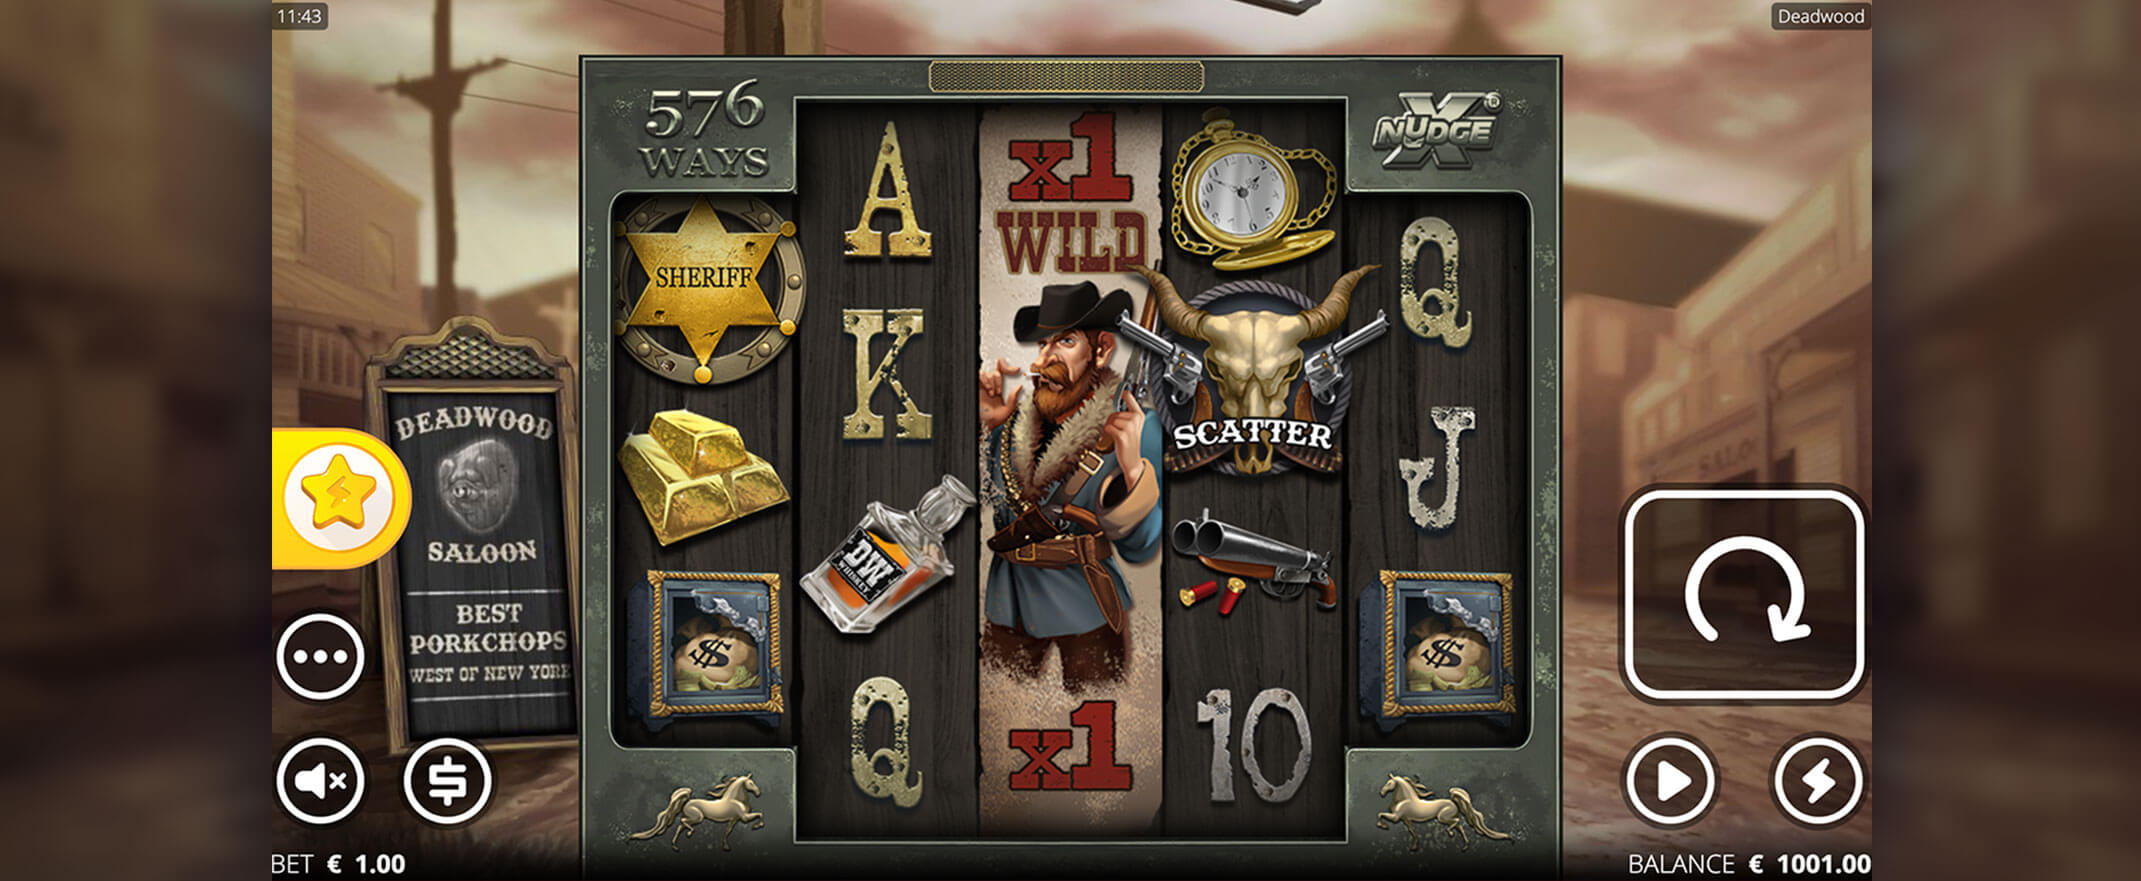 Deadwood Slot Screenshot